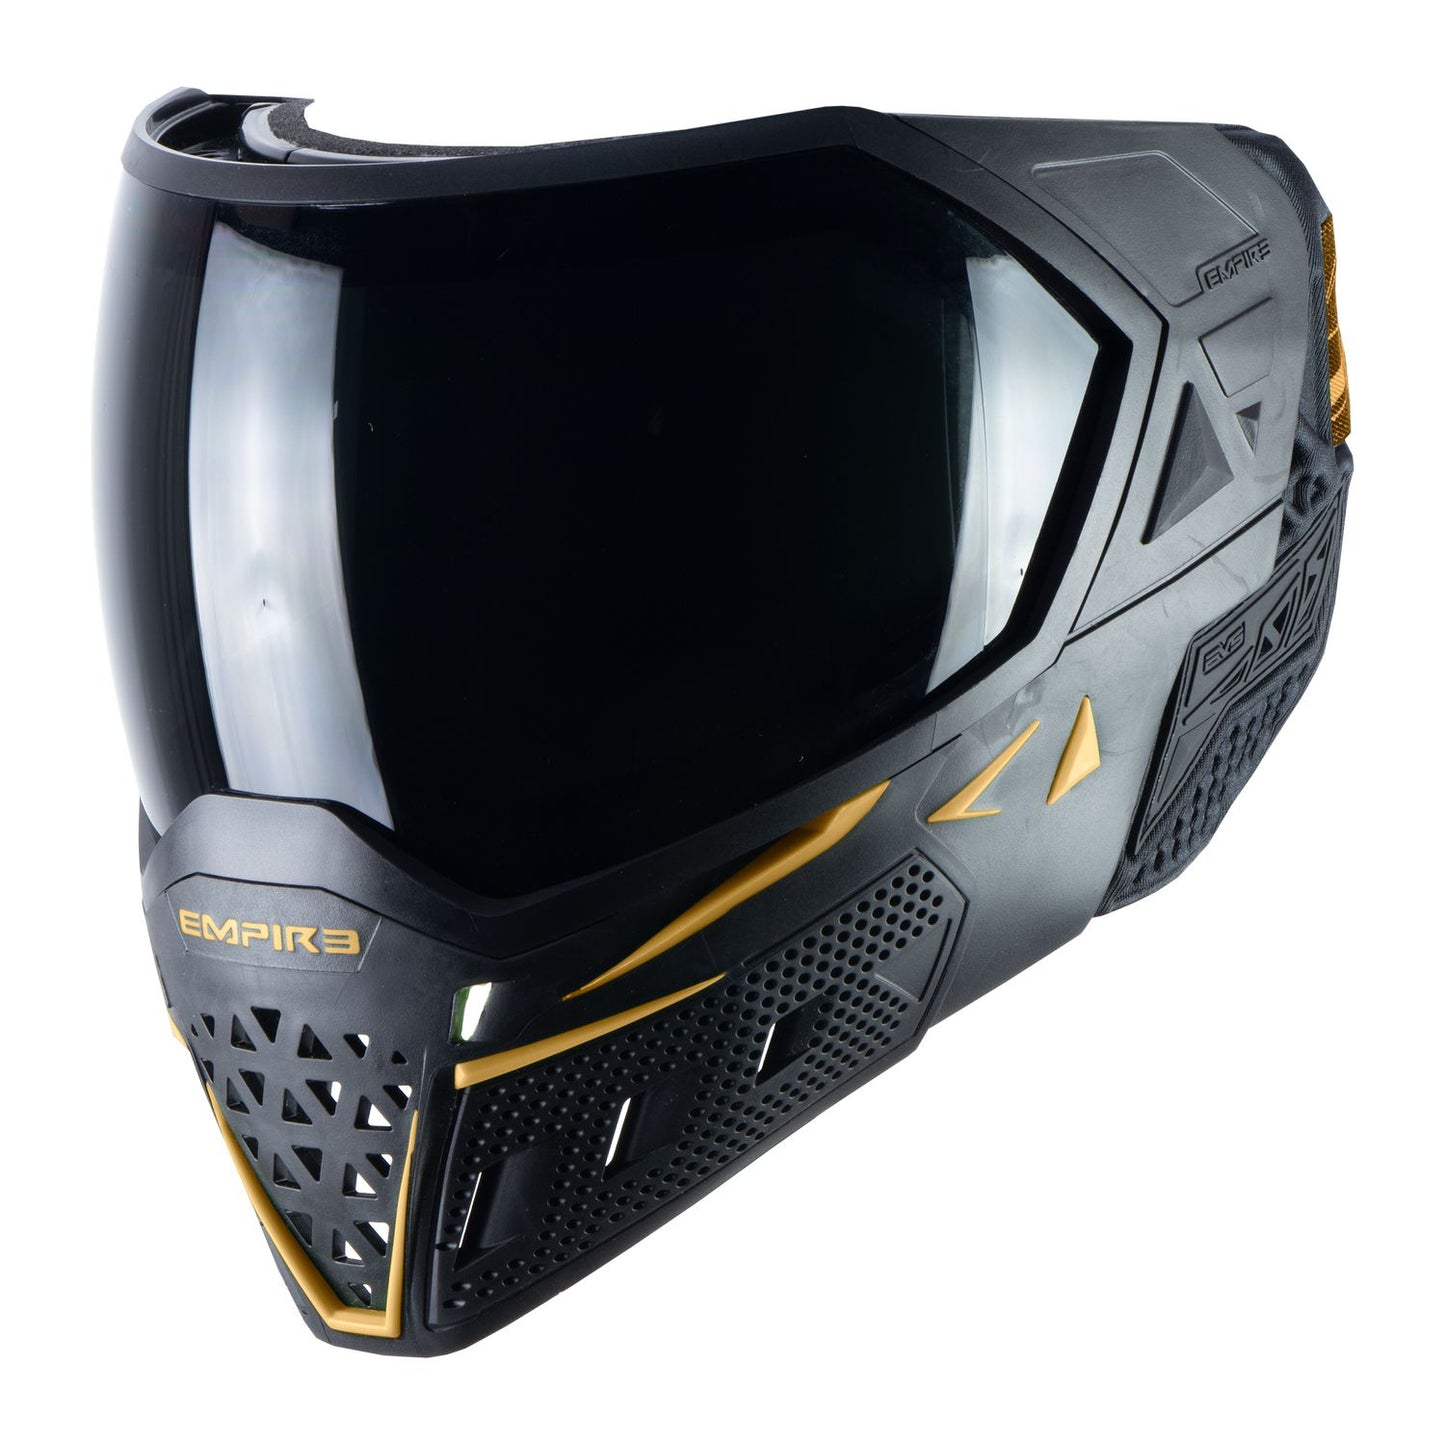 Empire EVS Enhanced Vision System Goggle - Black/Gold - includes 2 lenses